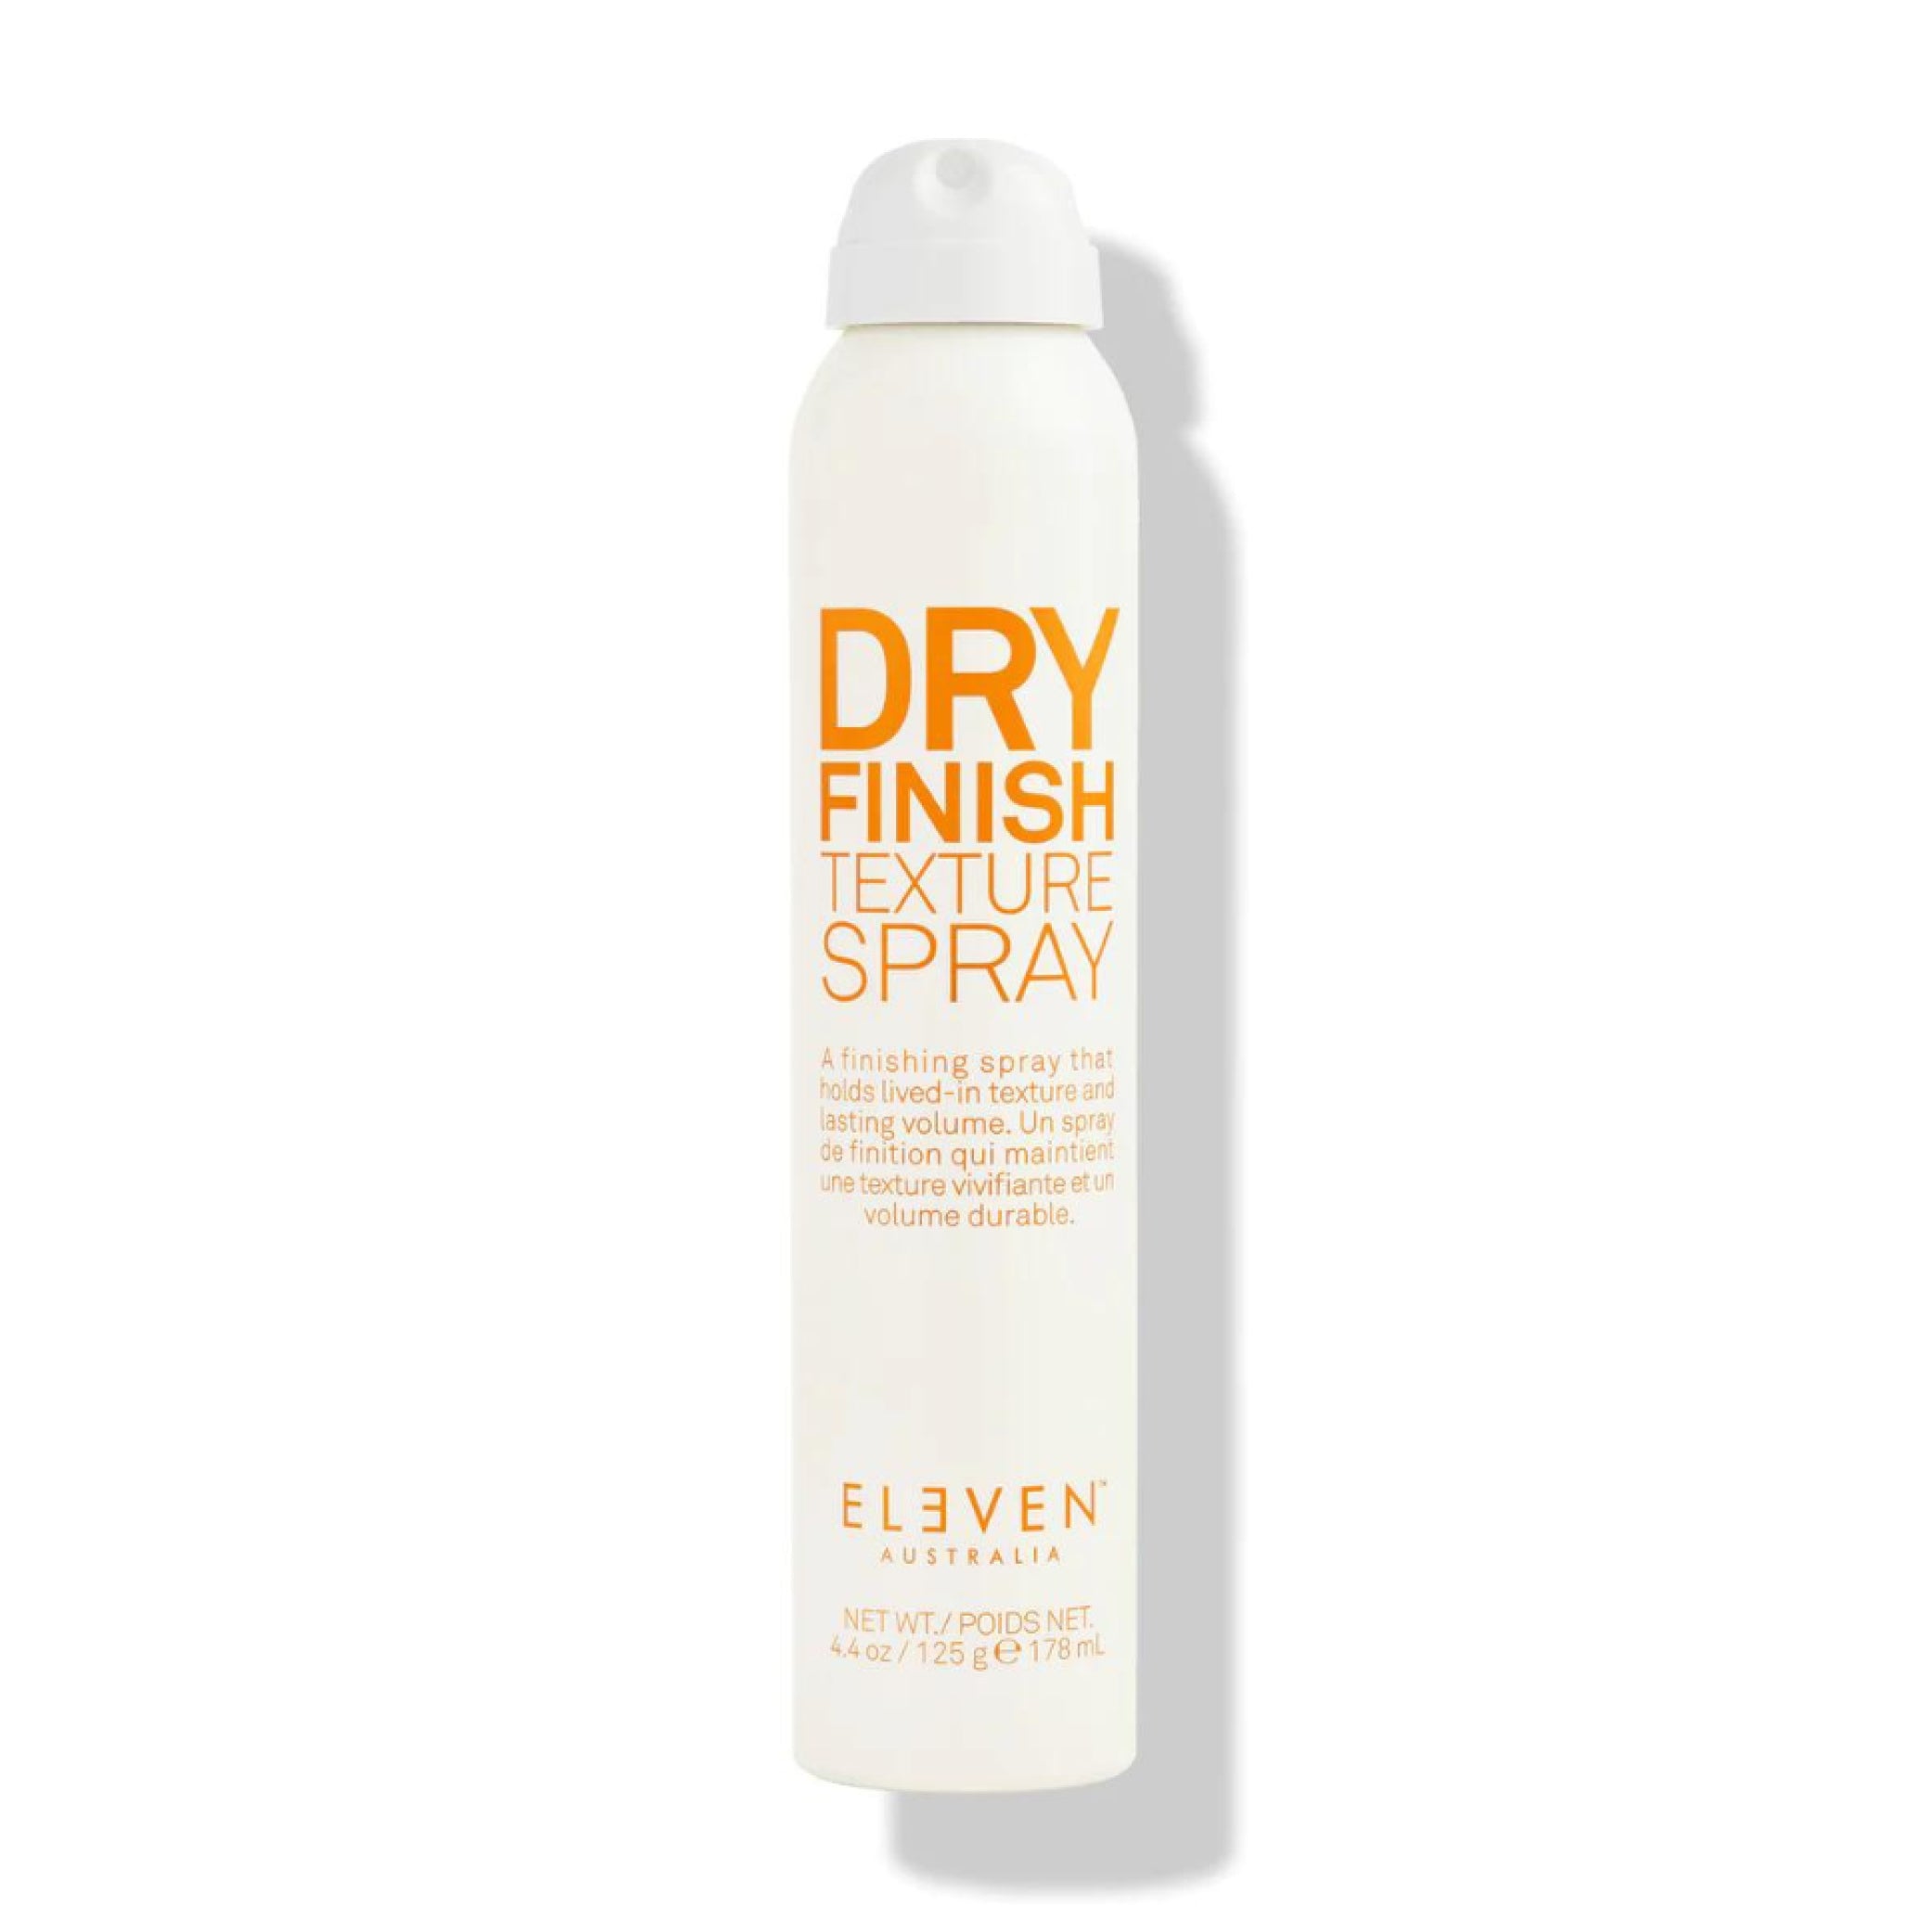 Spray de finition Dry Texture